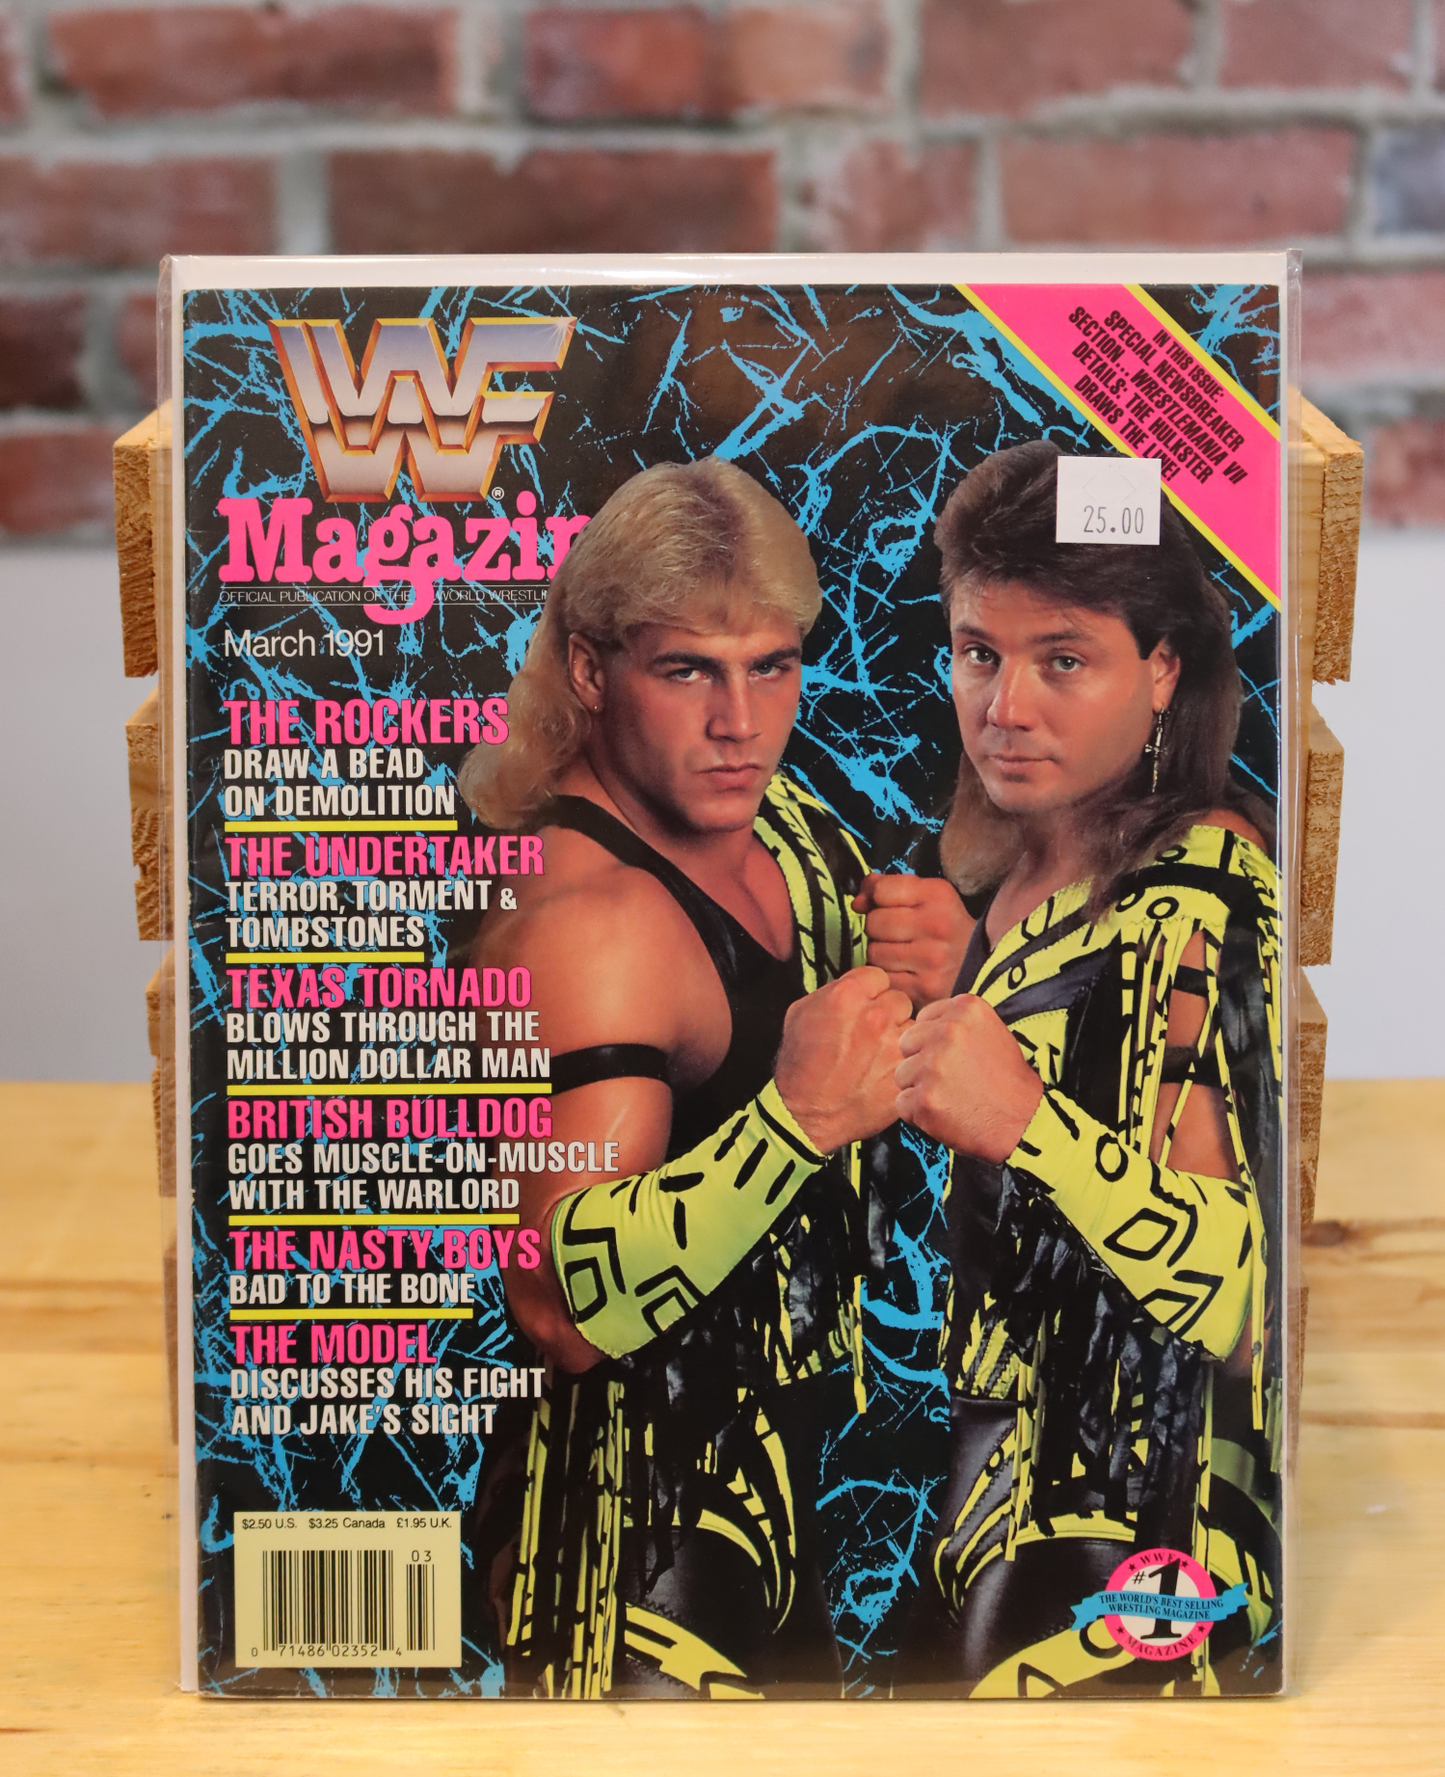 Original WWF WWE Vintage Wrestling Magazine The Rockers (March 1991)